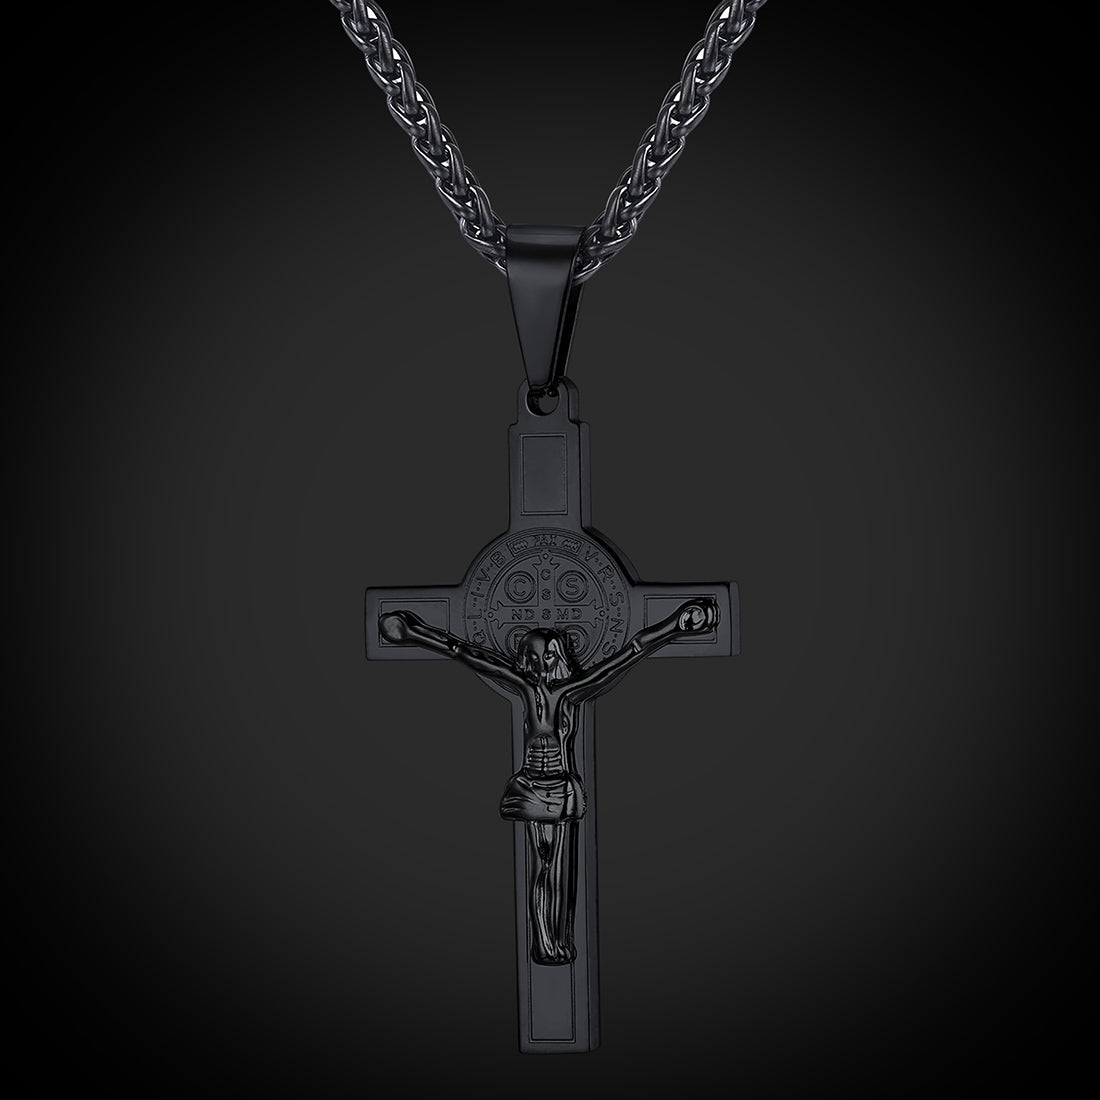 FaithHeart Catholic Saint Benedict Crucifix Cross Necklace For Men FaithHeart